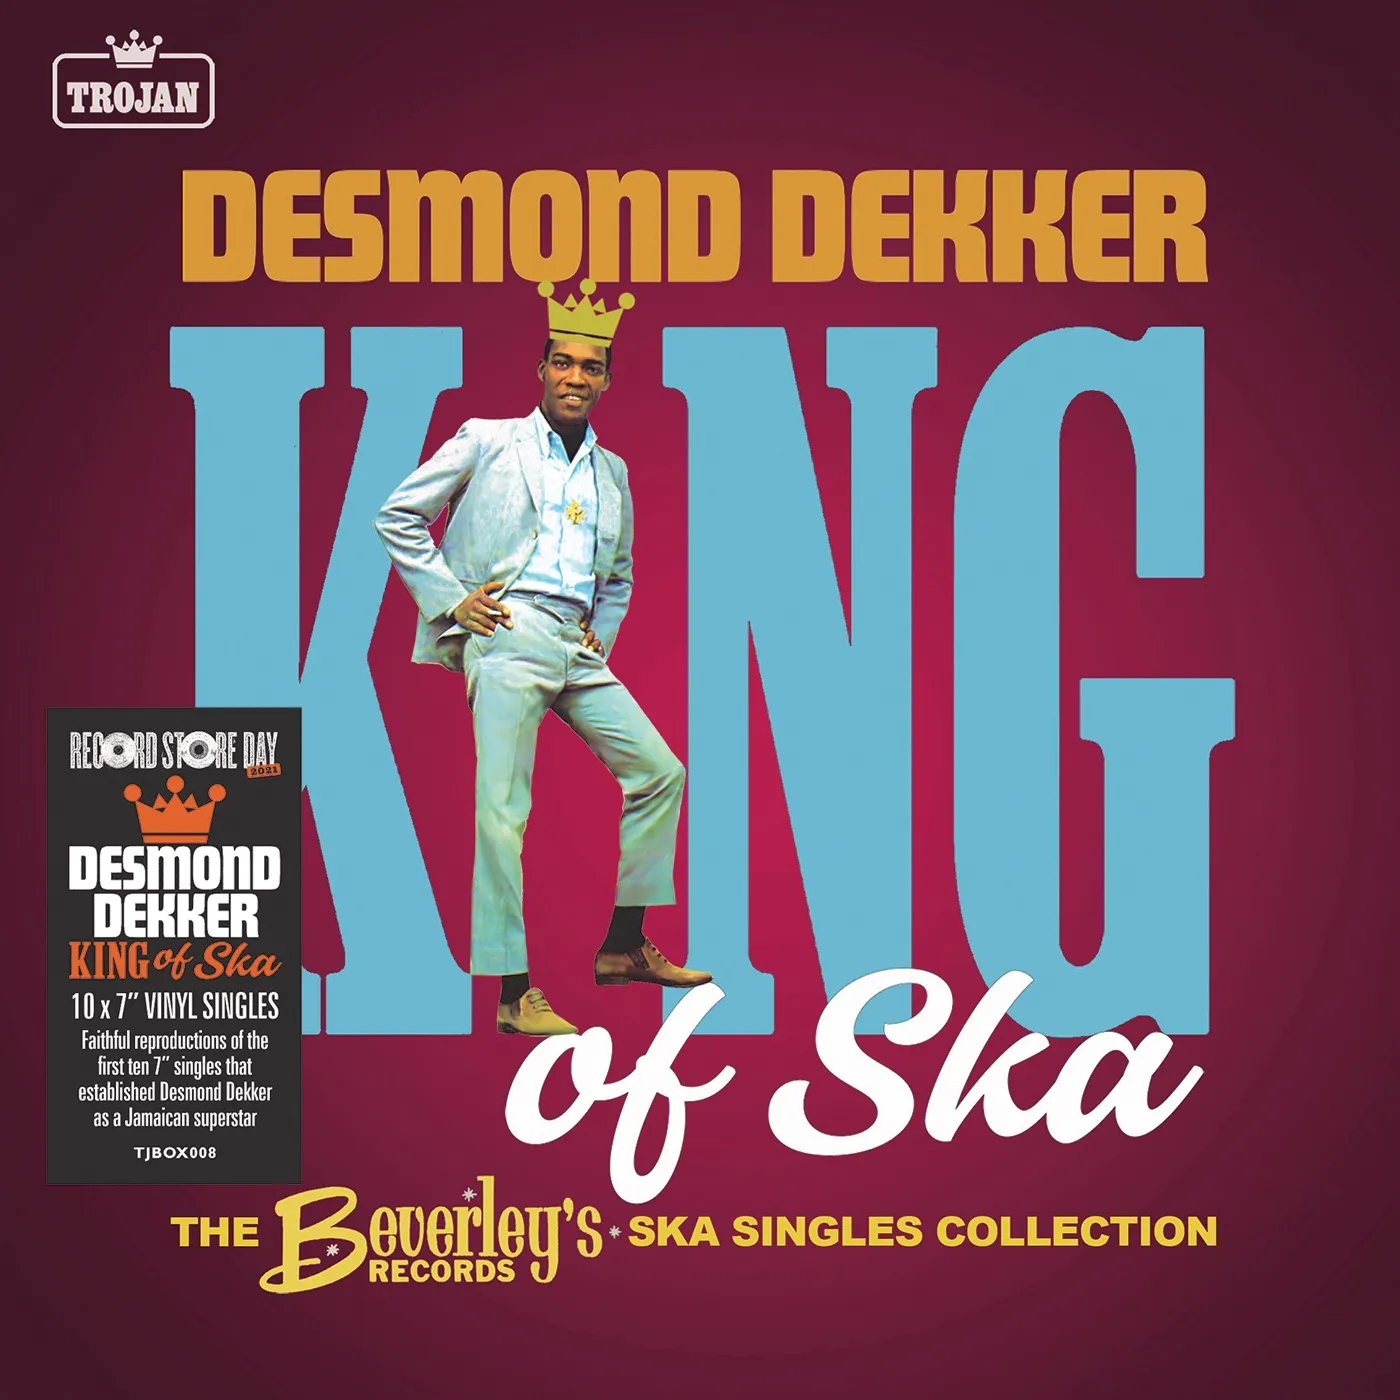 Desmond Dekker - King of Ska: The Early Singles Collection, 1963 - 1966 [RSD Drops 2021]